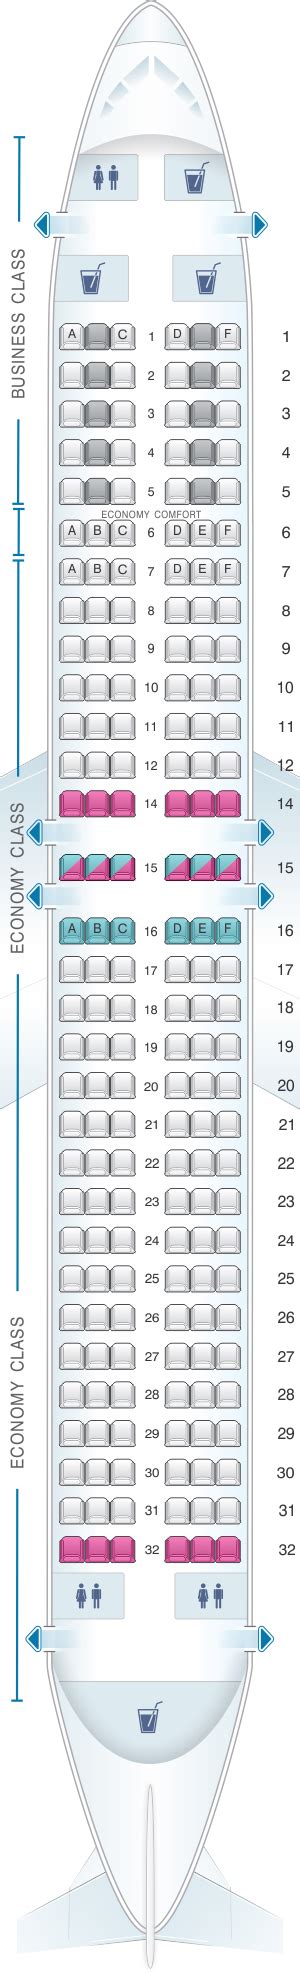 klm boeing 737-800 seat map